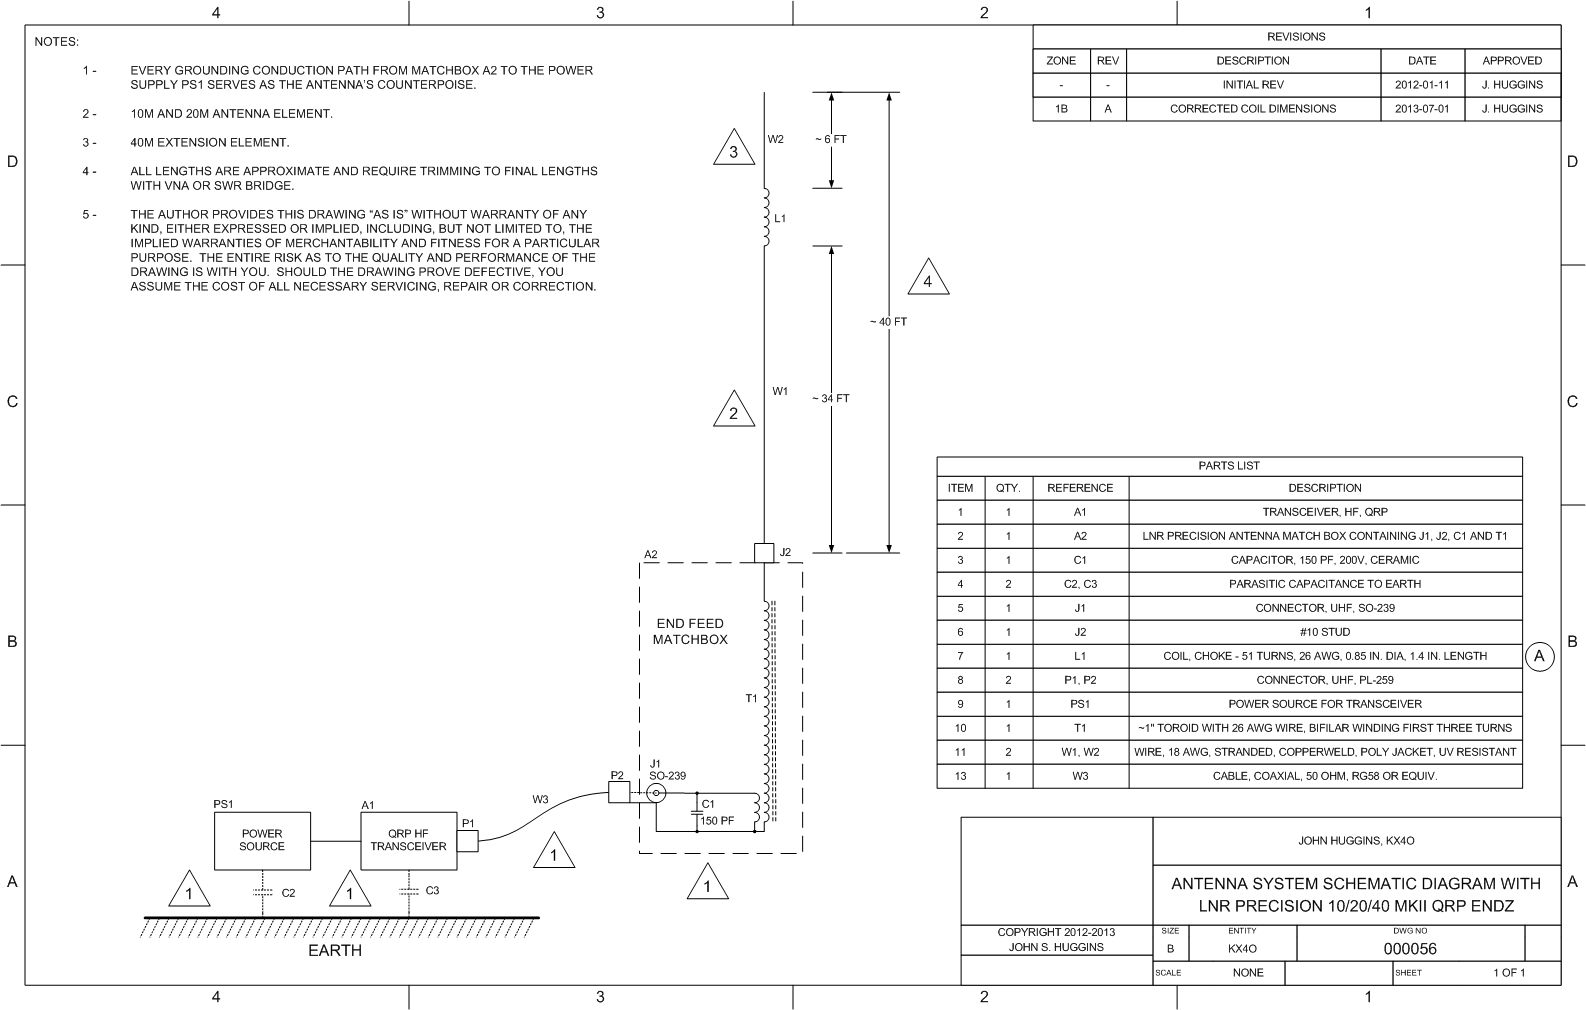 System Schematic of LNR Precision 10/20/40 Deployment